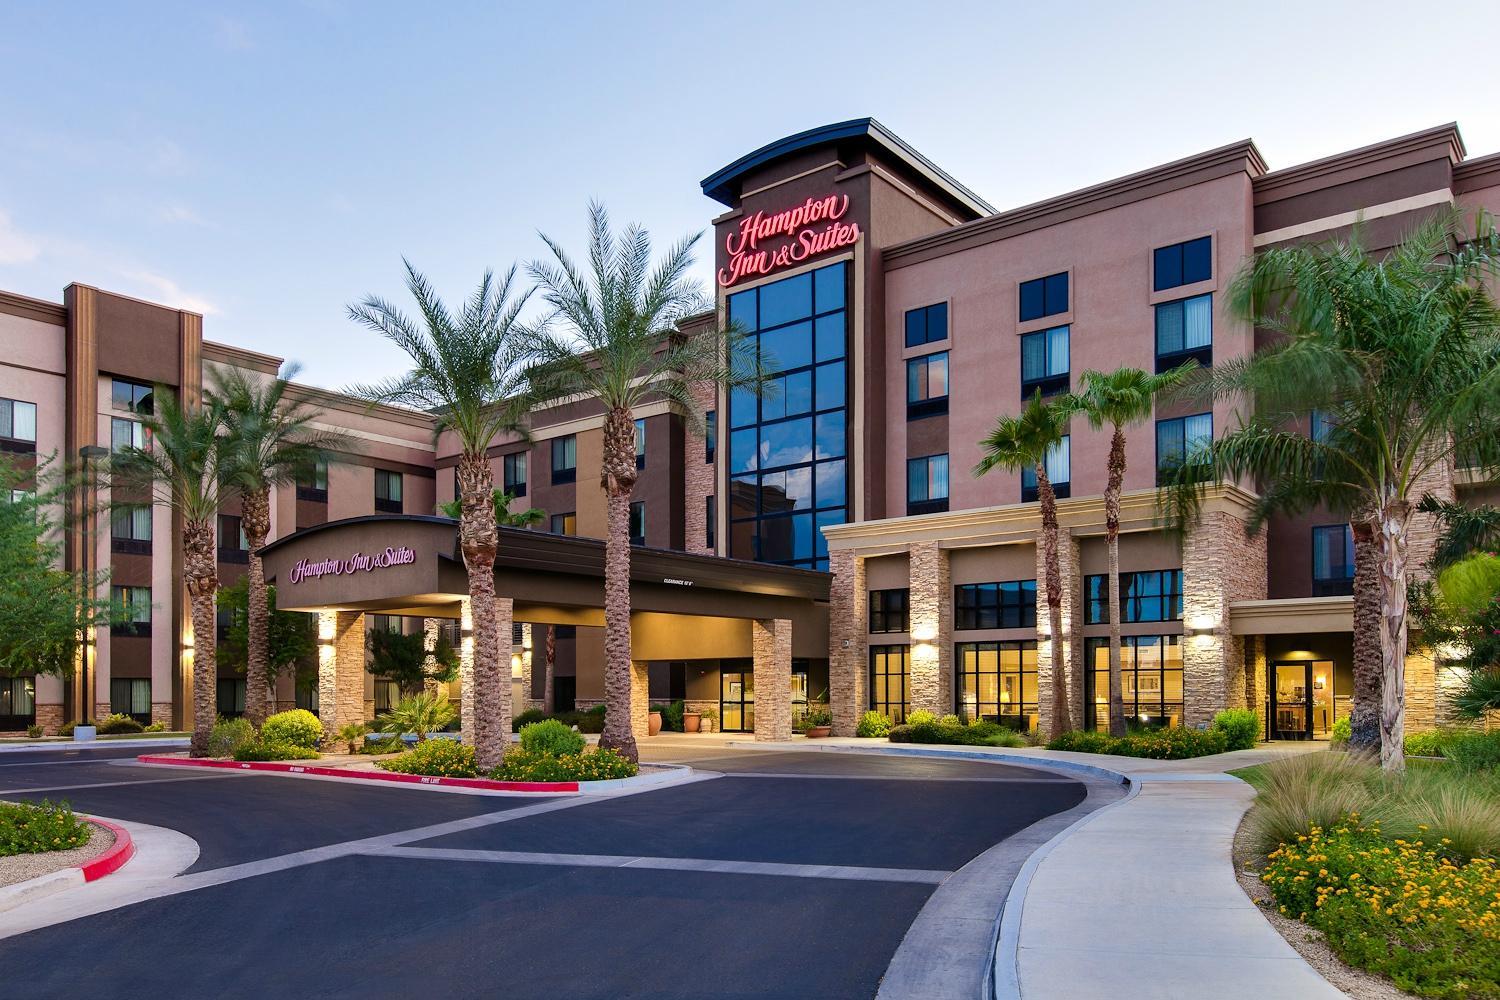 Photo of Hampton Inn & Suites Phoenix Glendale-Westgate, Glendale, AZ